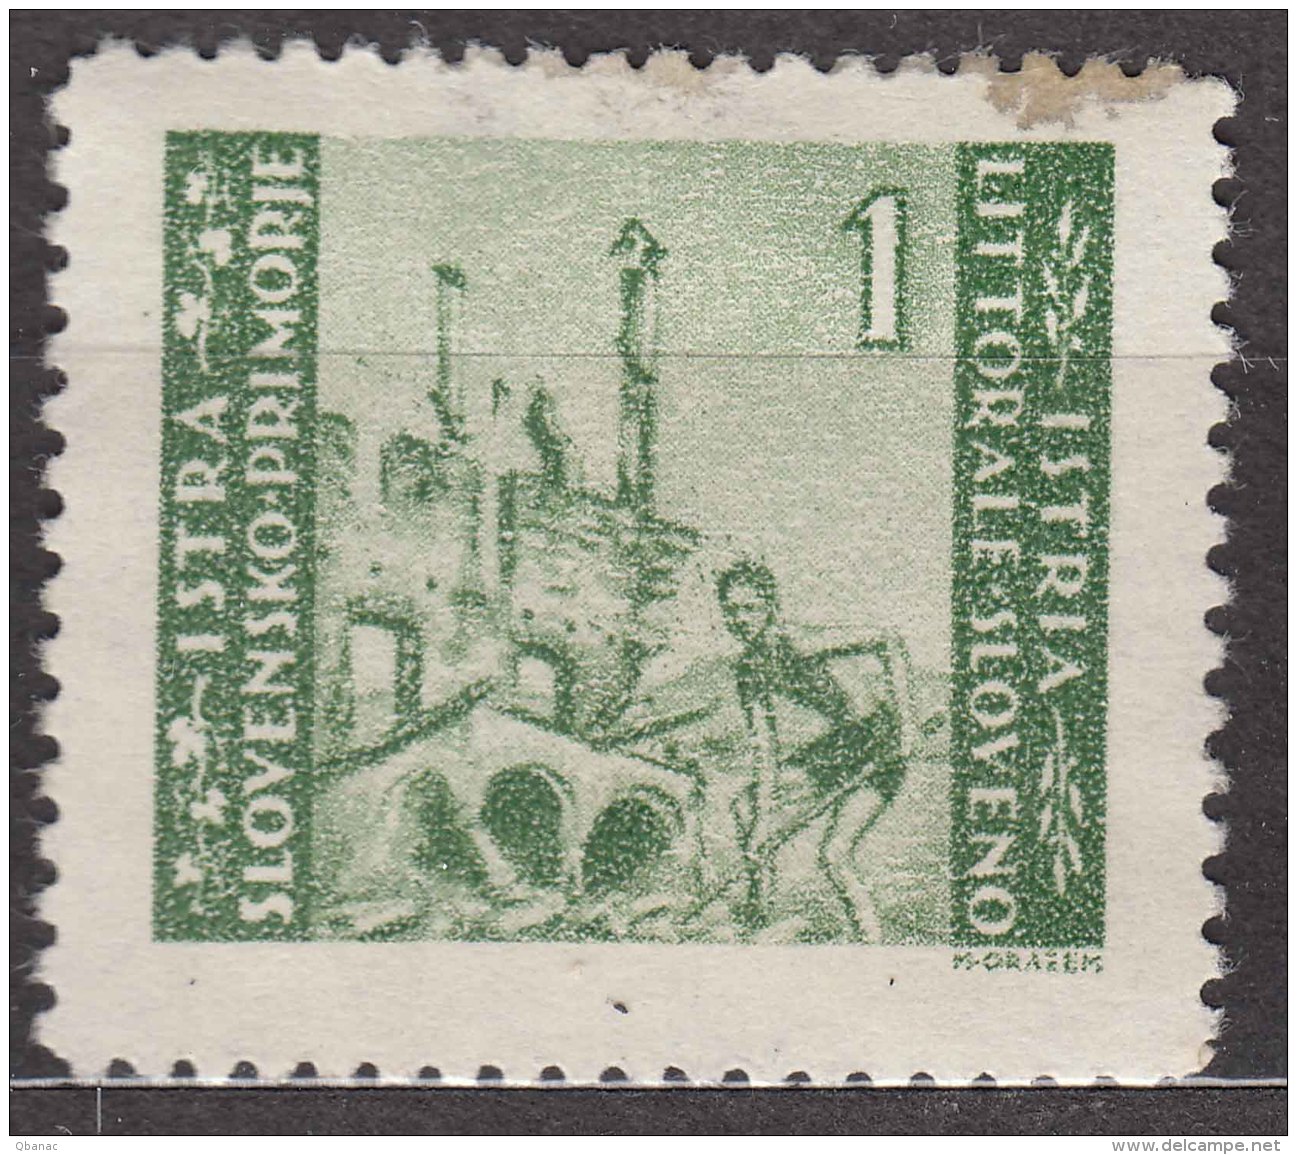 Istria Litorale Yugoslavia Occupation, 1946 Sassone#53 Mint Hinged - Occ. Yougoslave: Istria